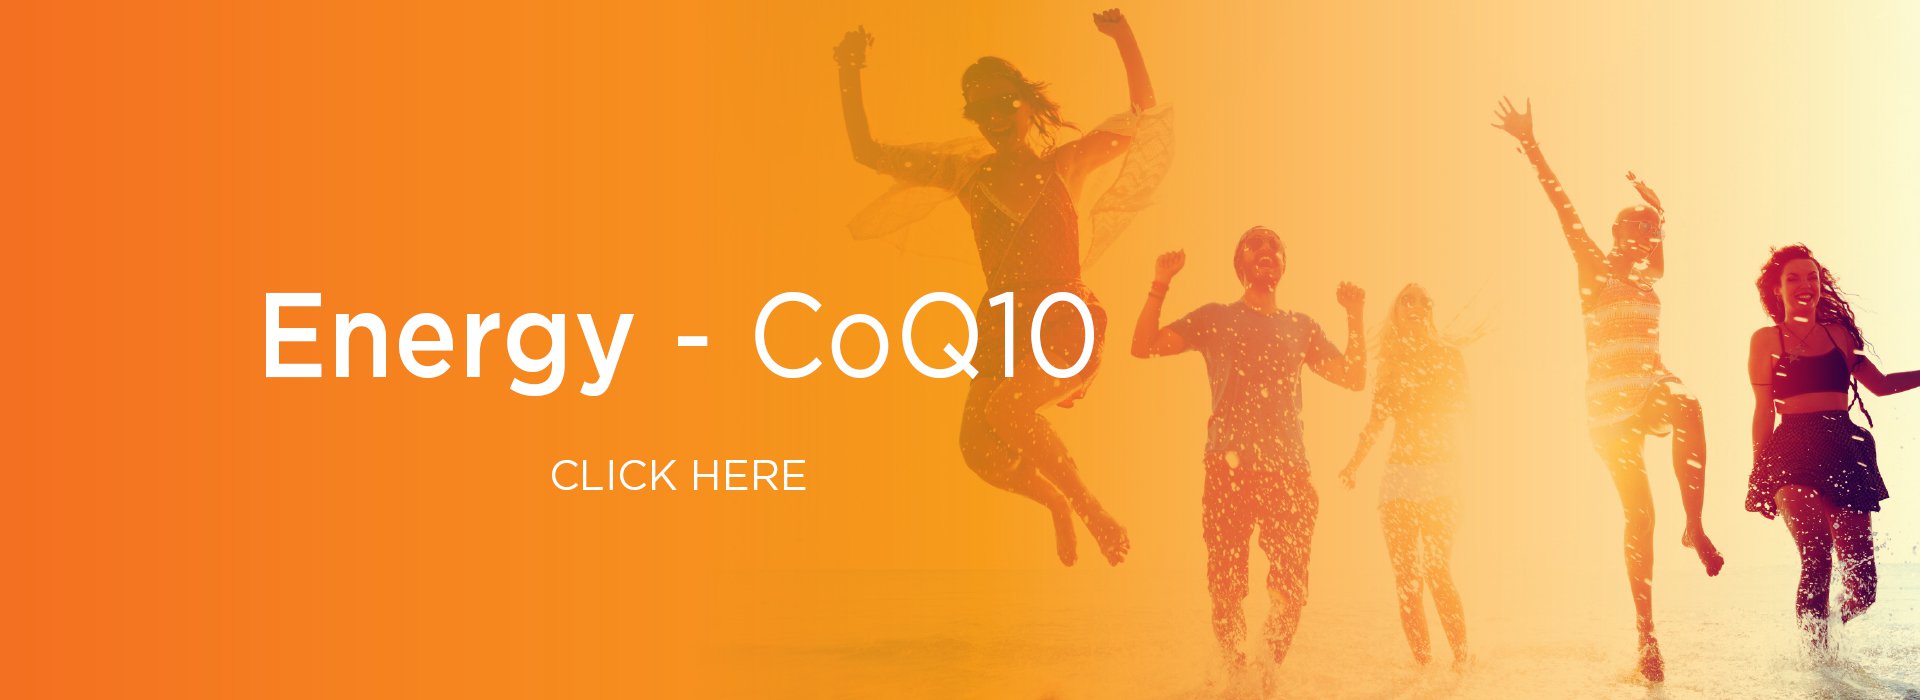 New Image International:Energy CoQ10